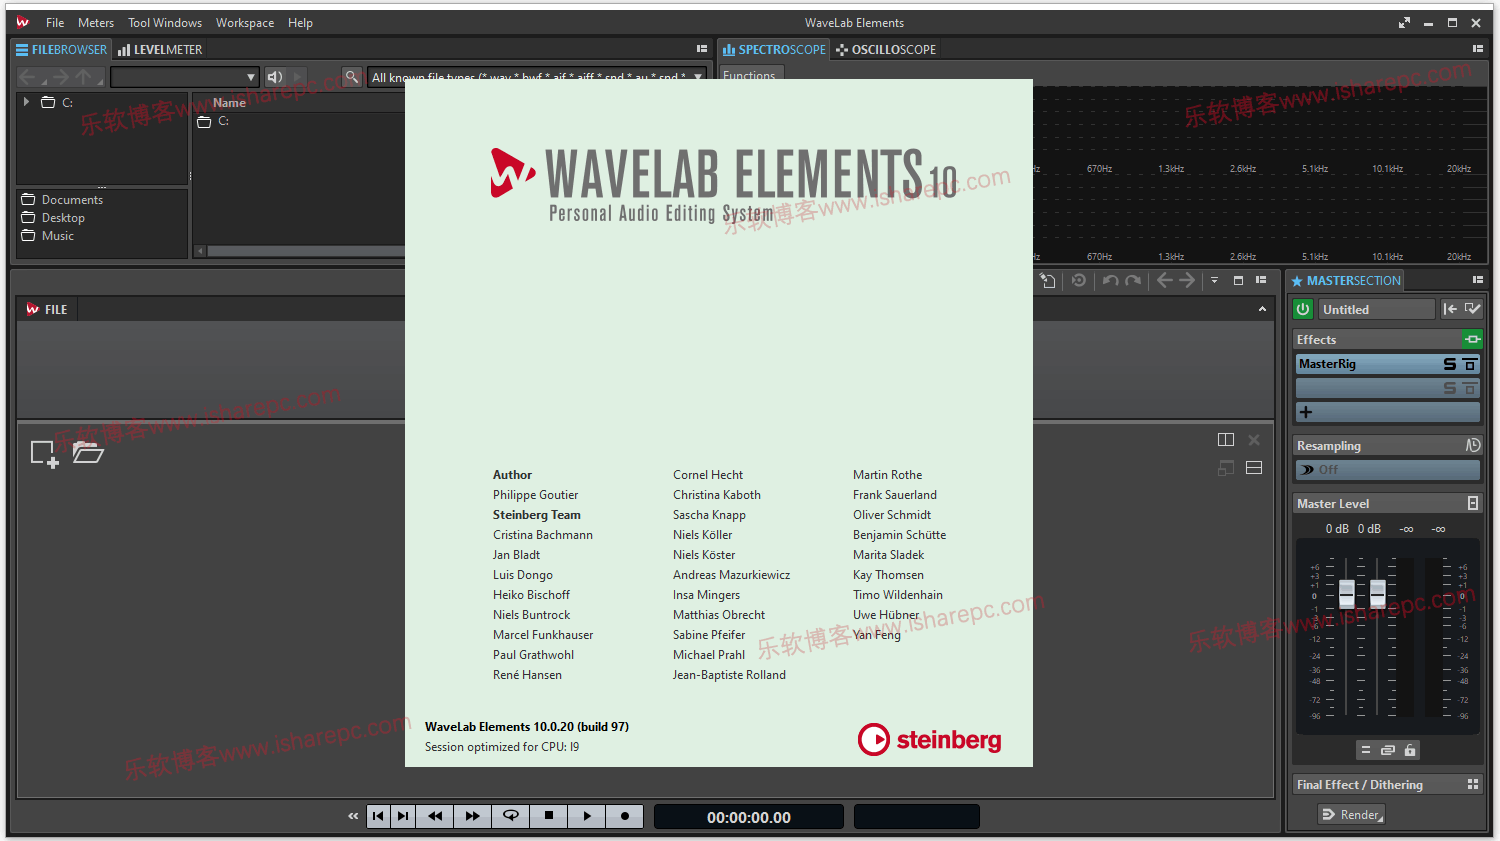 wavelab elements 10 upgrade